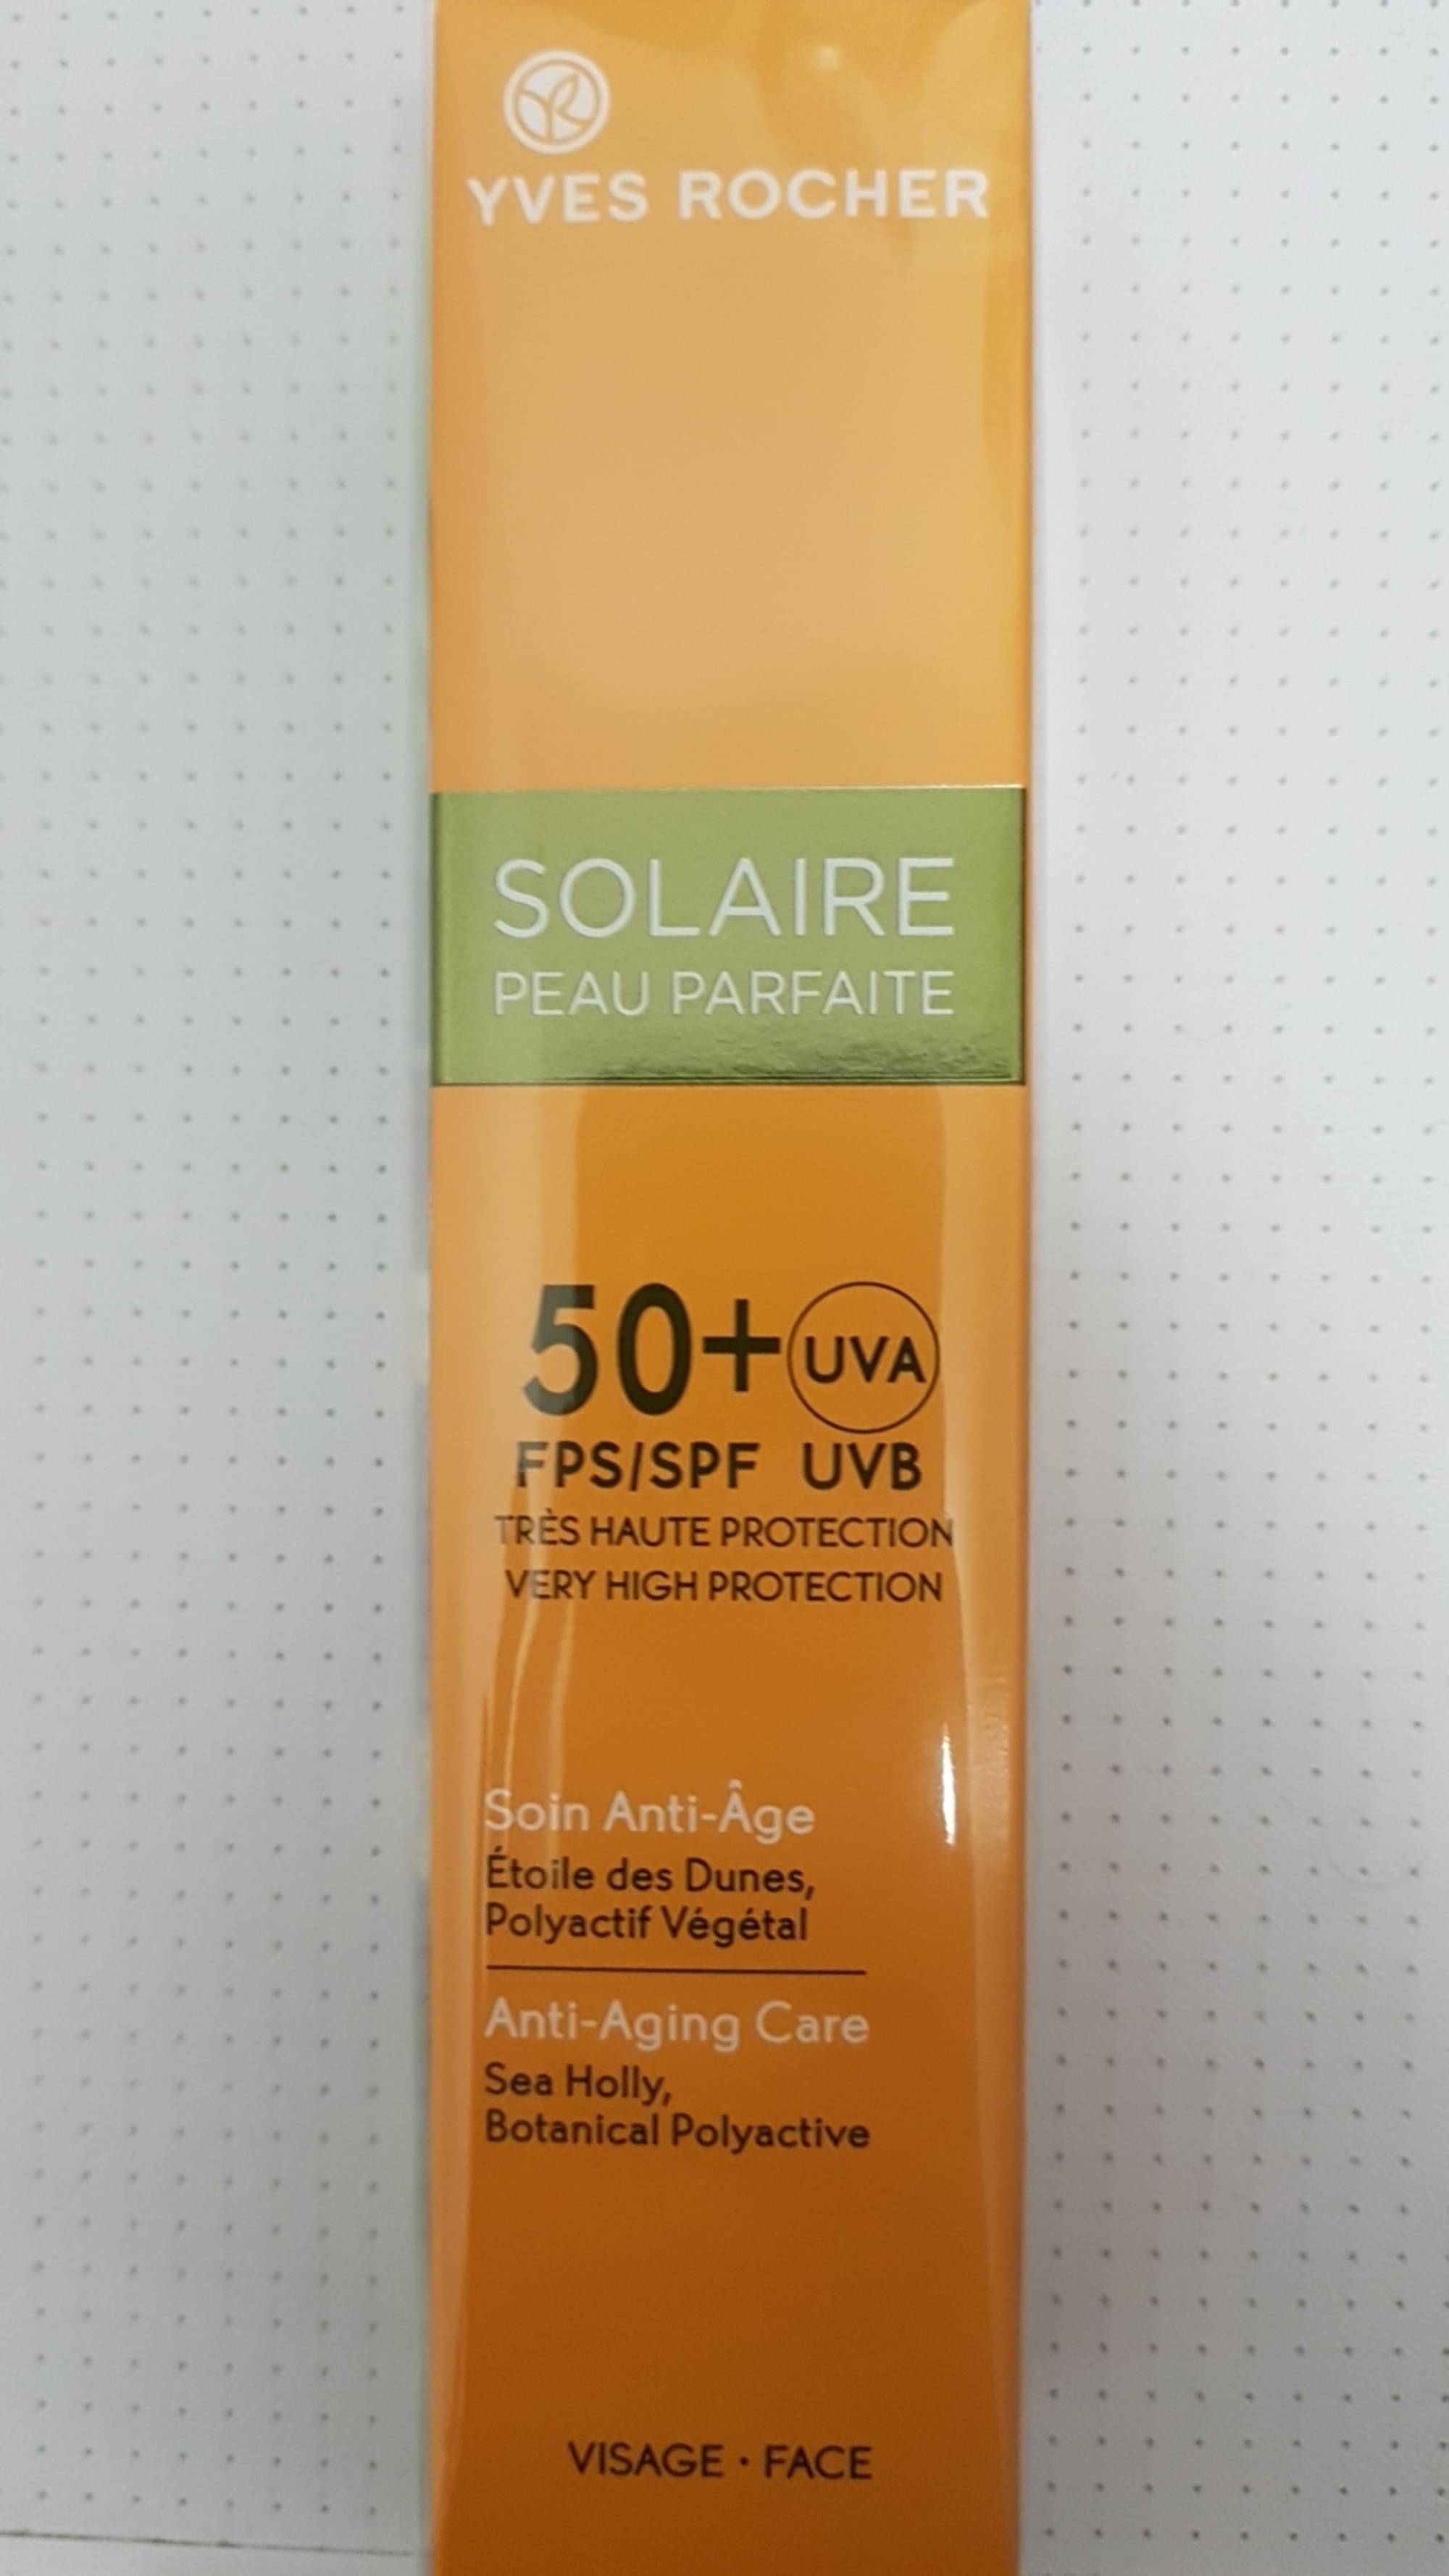 YVES ROCHER - Solaire peau parfaite FPS 50+ - Soin anti-âge